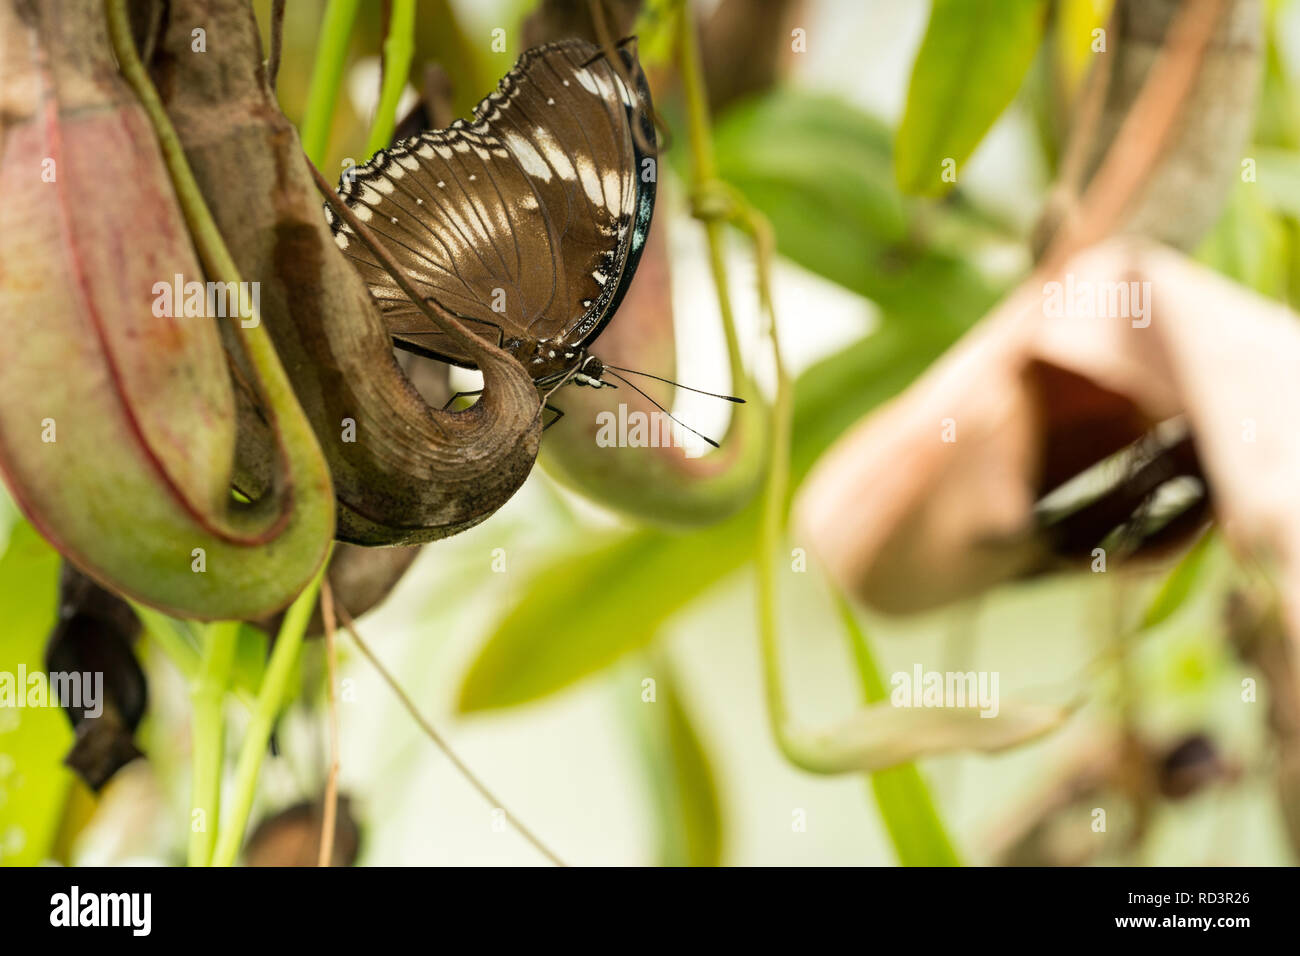 Butterfly, Morpho peleides, blue morphology with wings folded on a flesh eating carnivorous plant, macro image Stock Photo